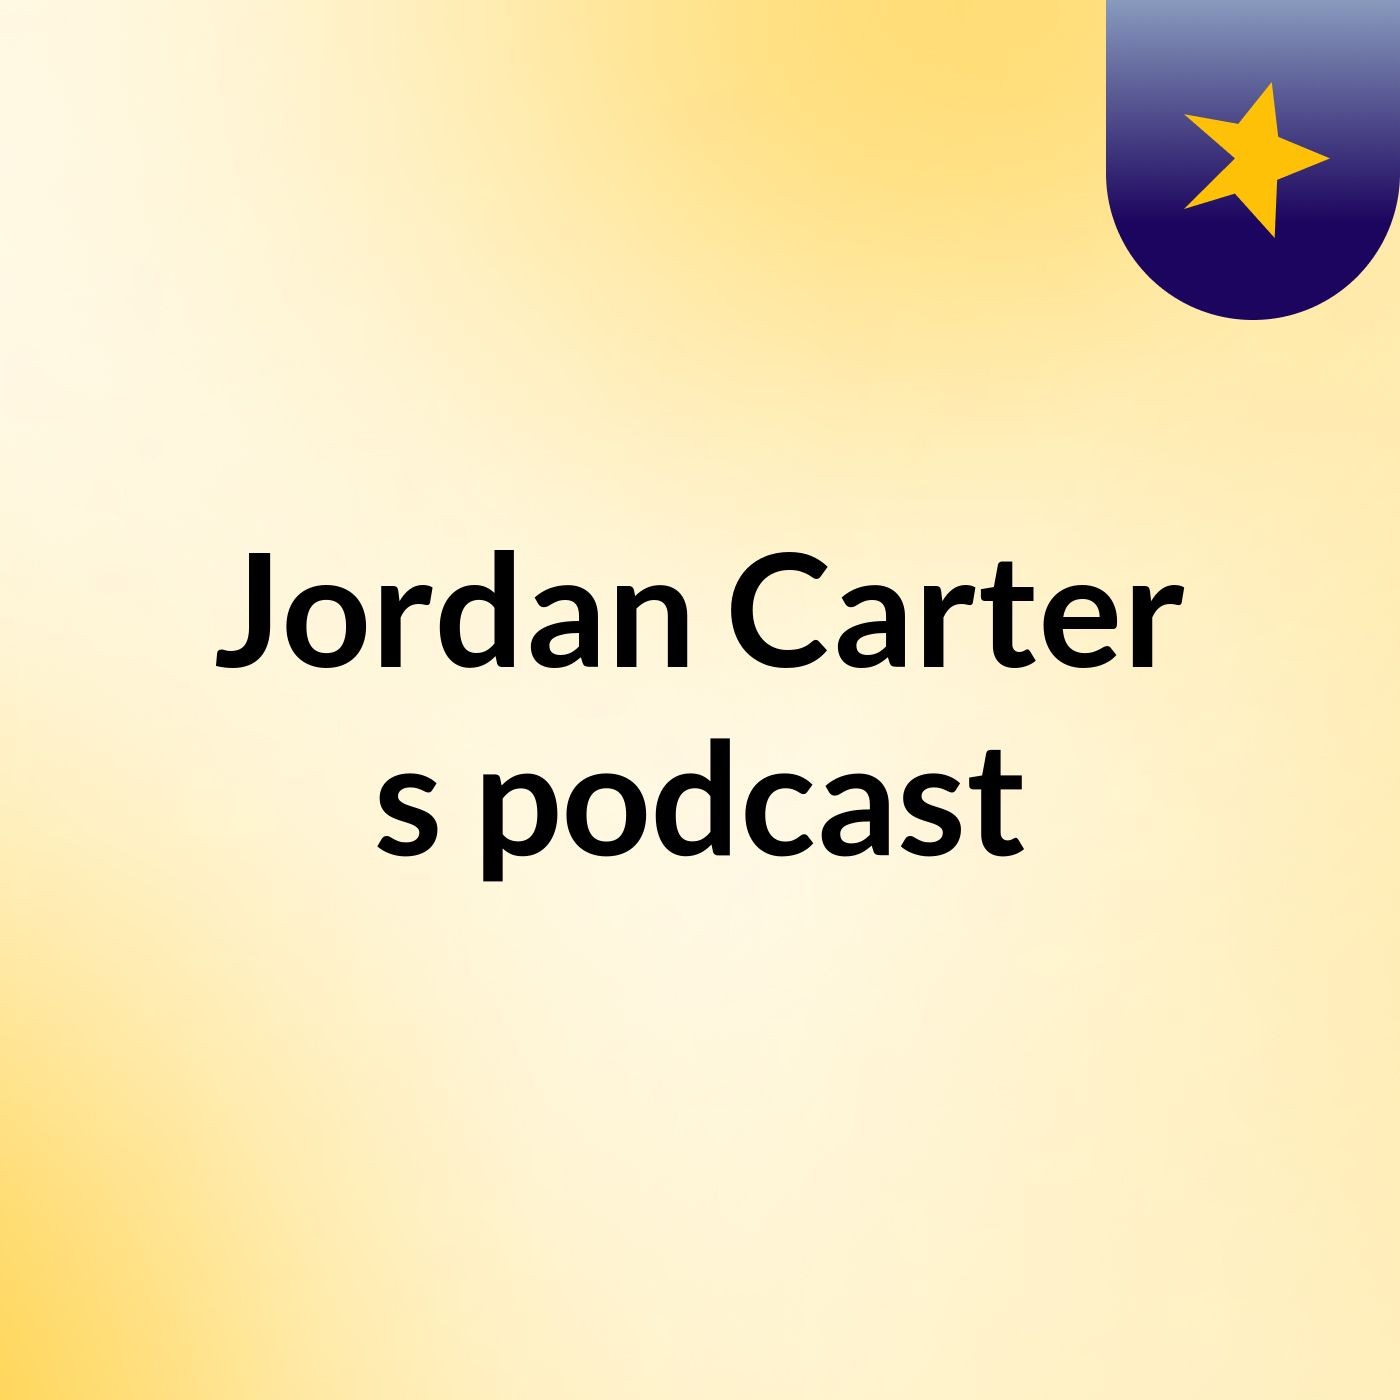 Jordan Carter's podcast